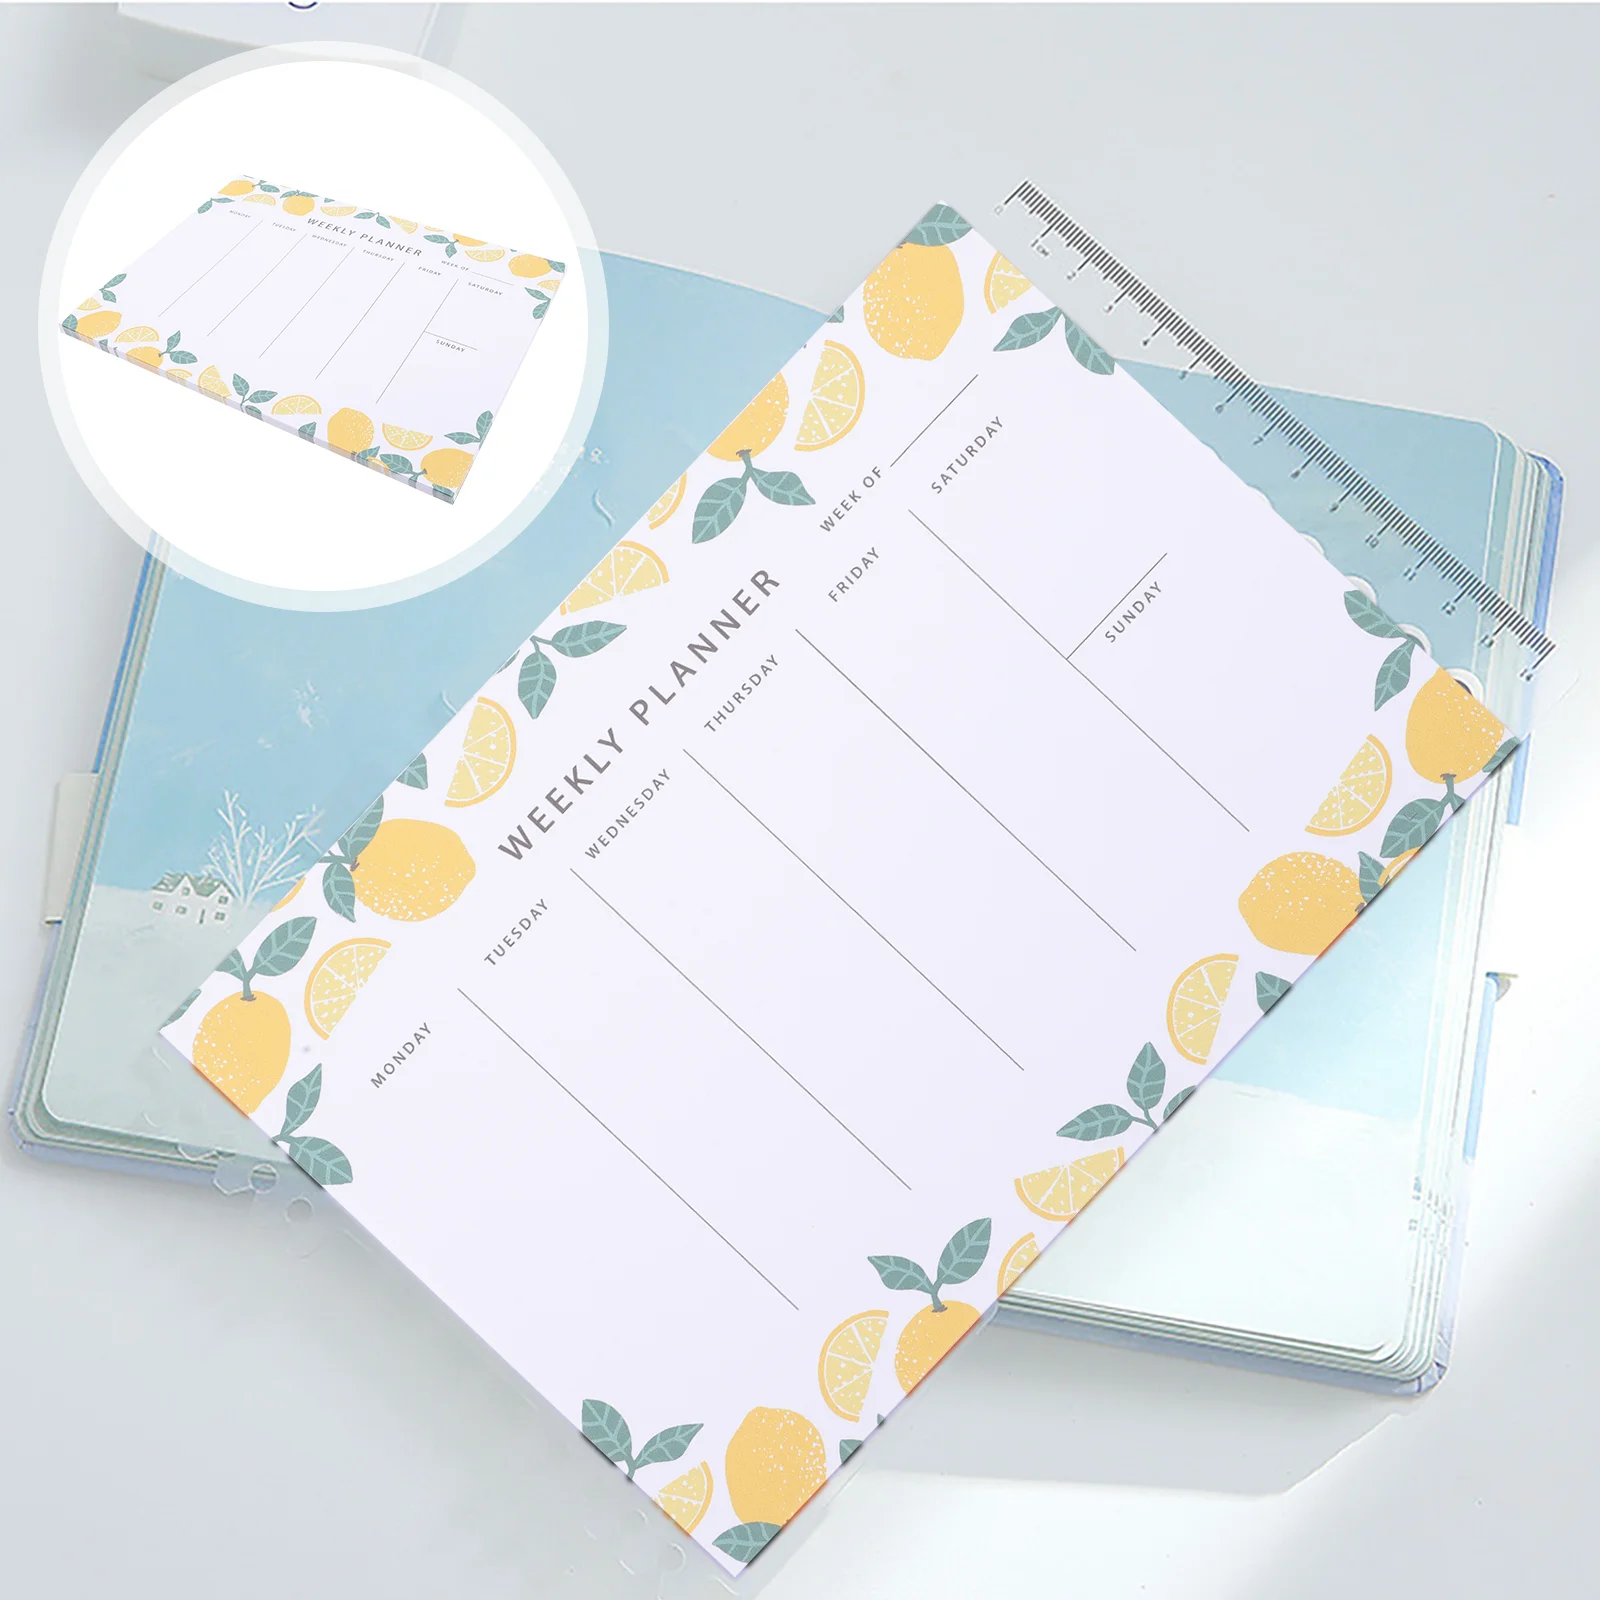 

Weekly Planner Planning Notepad Schedule Block Calendar Desk Paper To Do List Mini Notebook Monthly